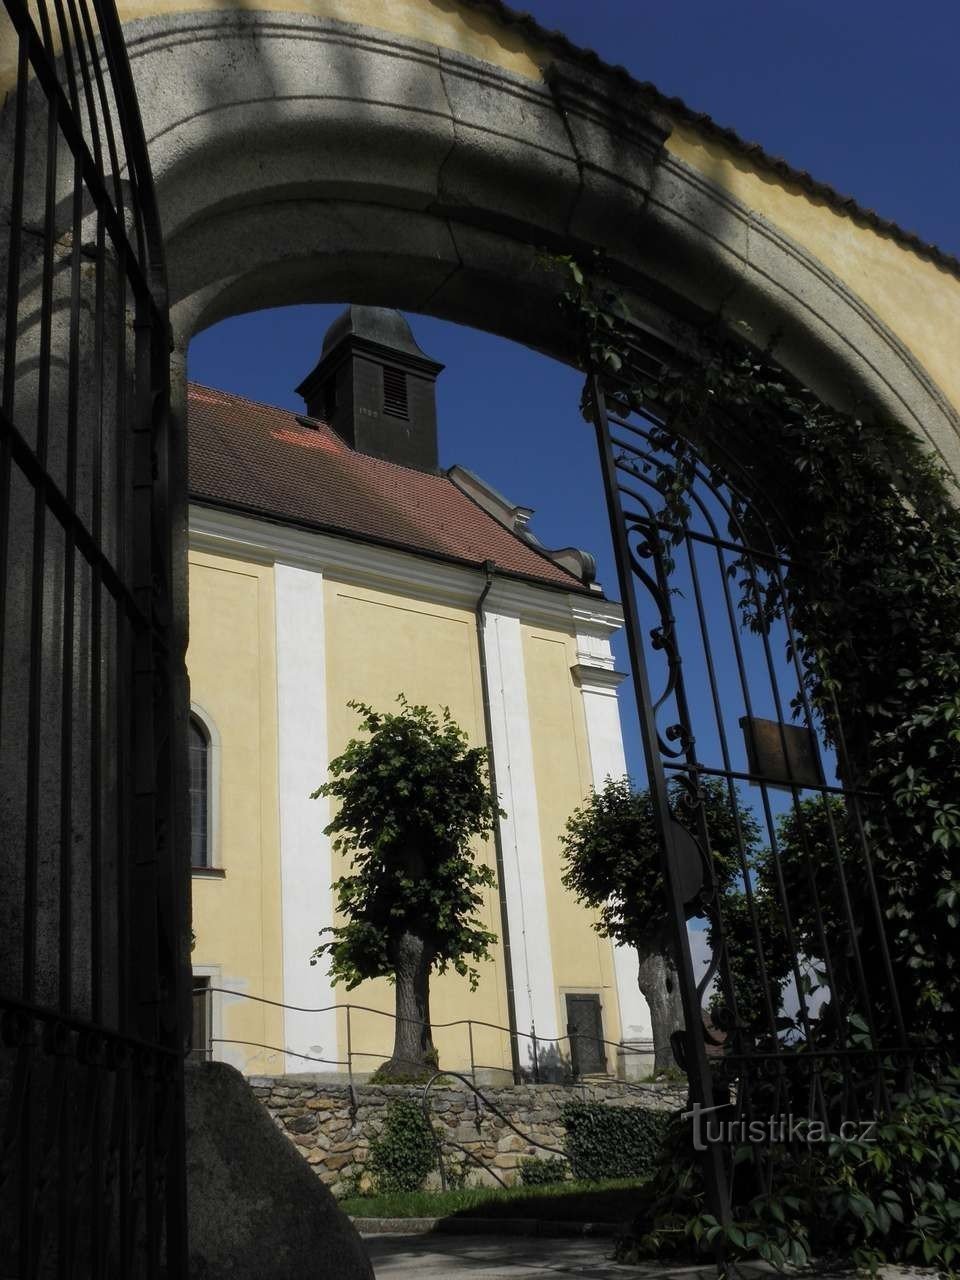 3.ª puerta a los terrenos del monasterio carmelita en Kostelní Vydří - 31.7.2010